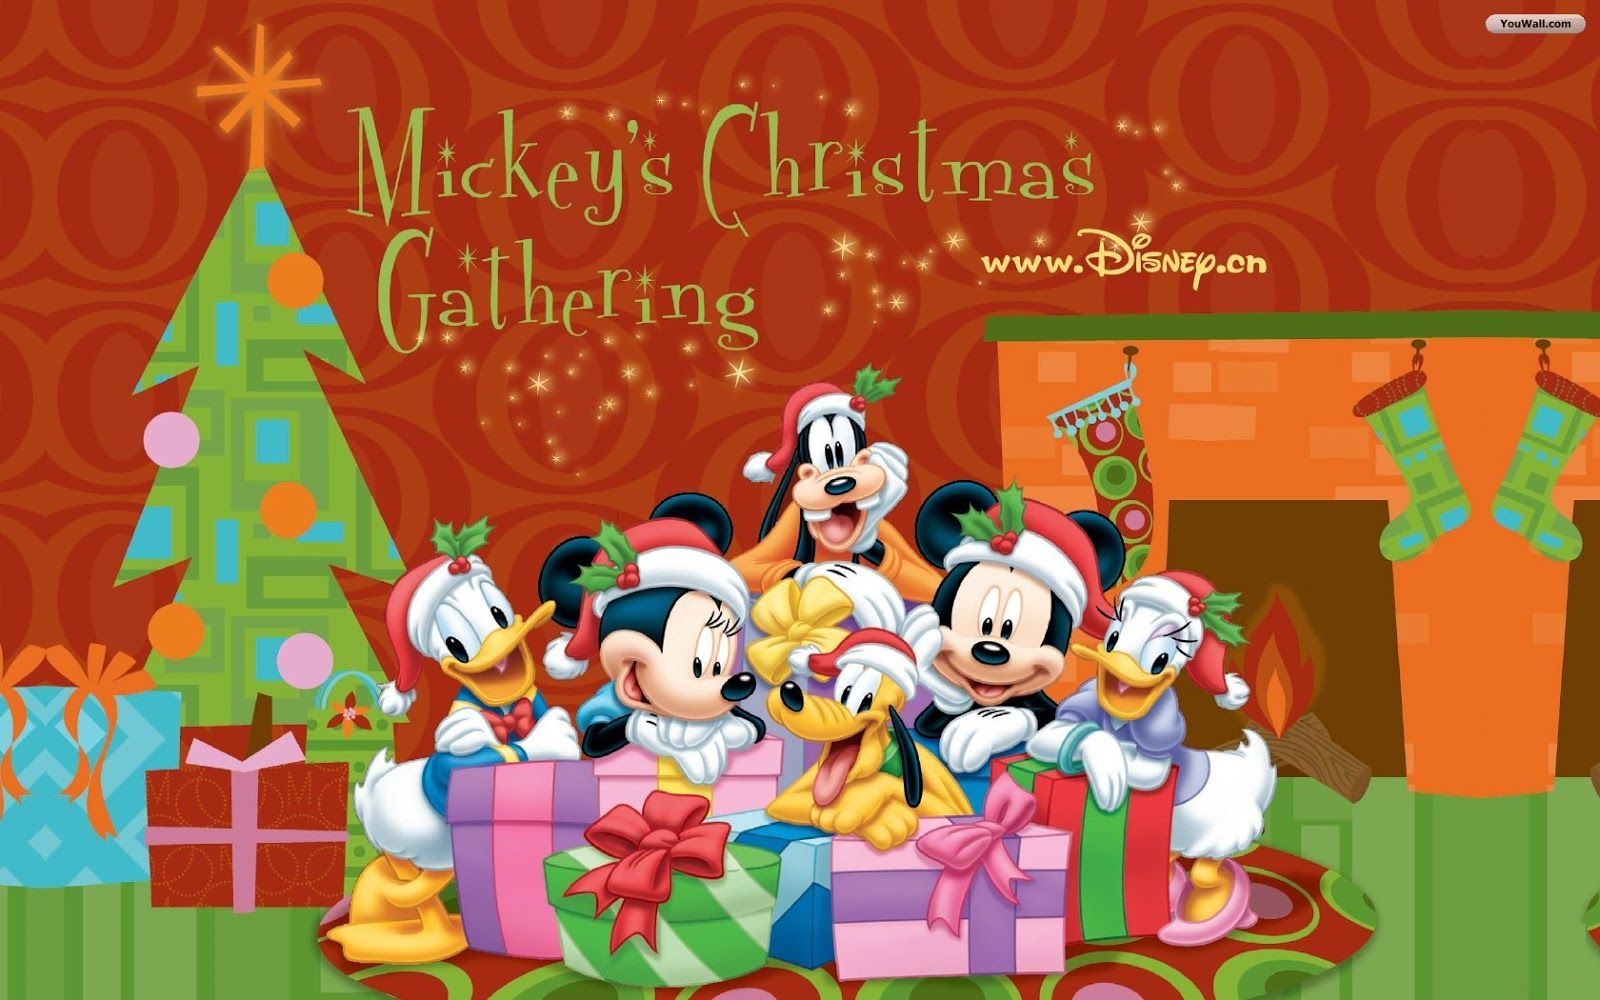 Disney Christmas Wallpaper. Wallpaper Mansion. Merry christmas song, Disney christmas, Christmas wallpaper hd